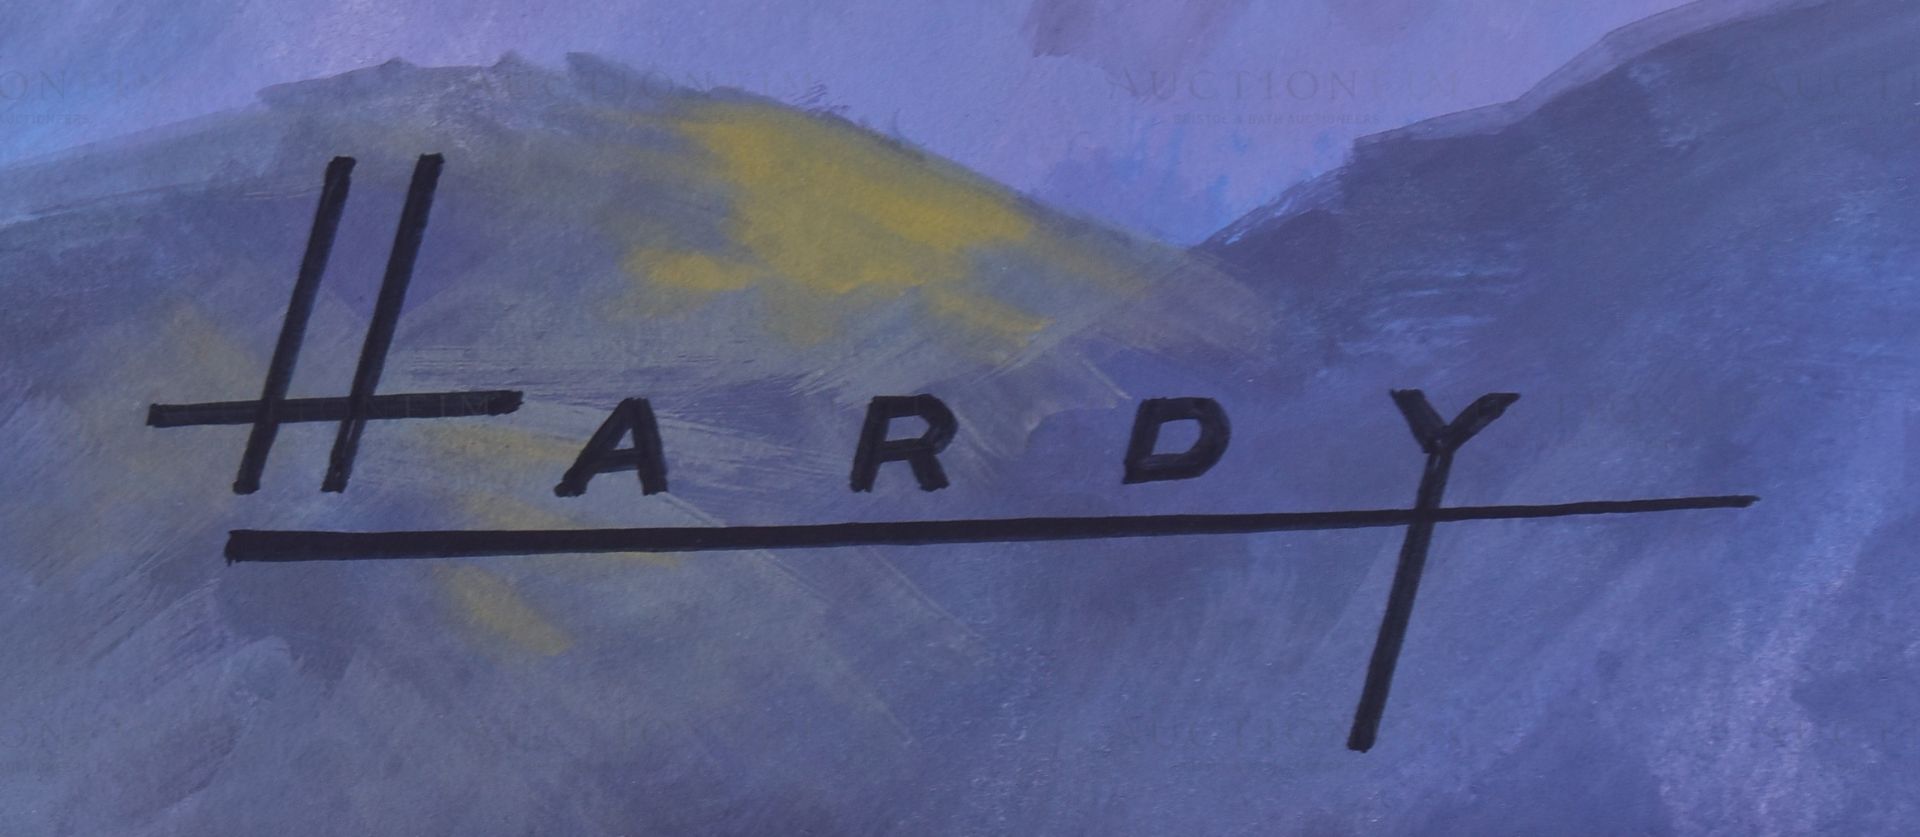 WILFRED HARDY - CASTELLA CIGARS - ORIGINAL ARTWORK - Image 4 of 6